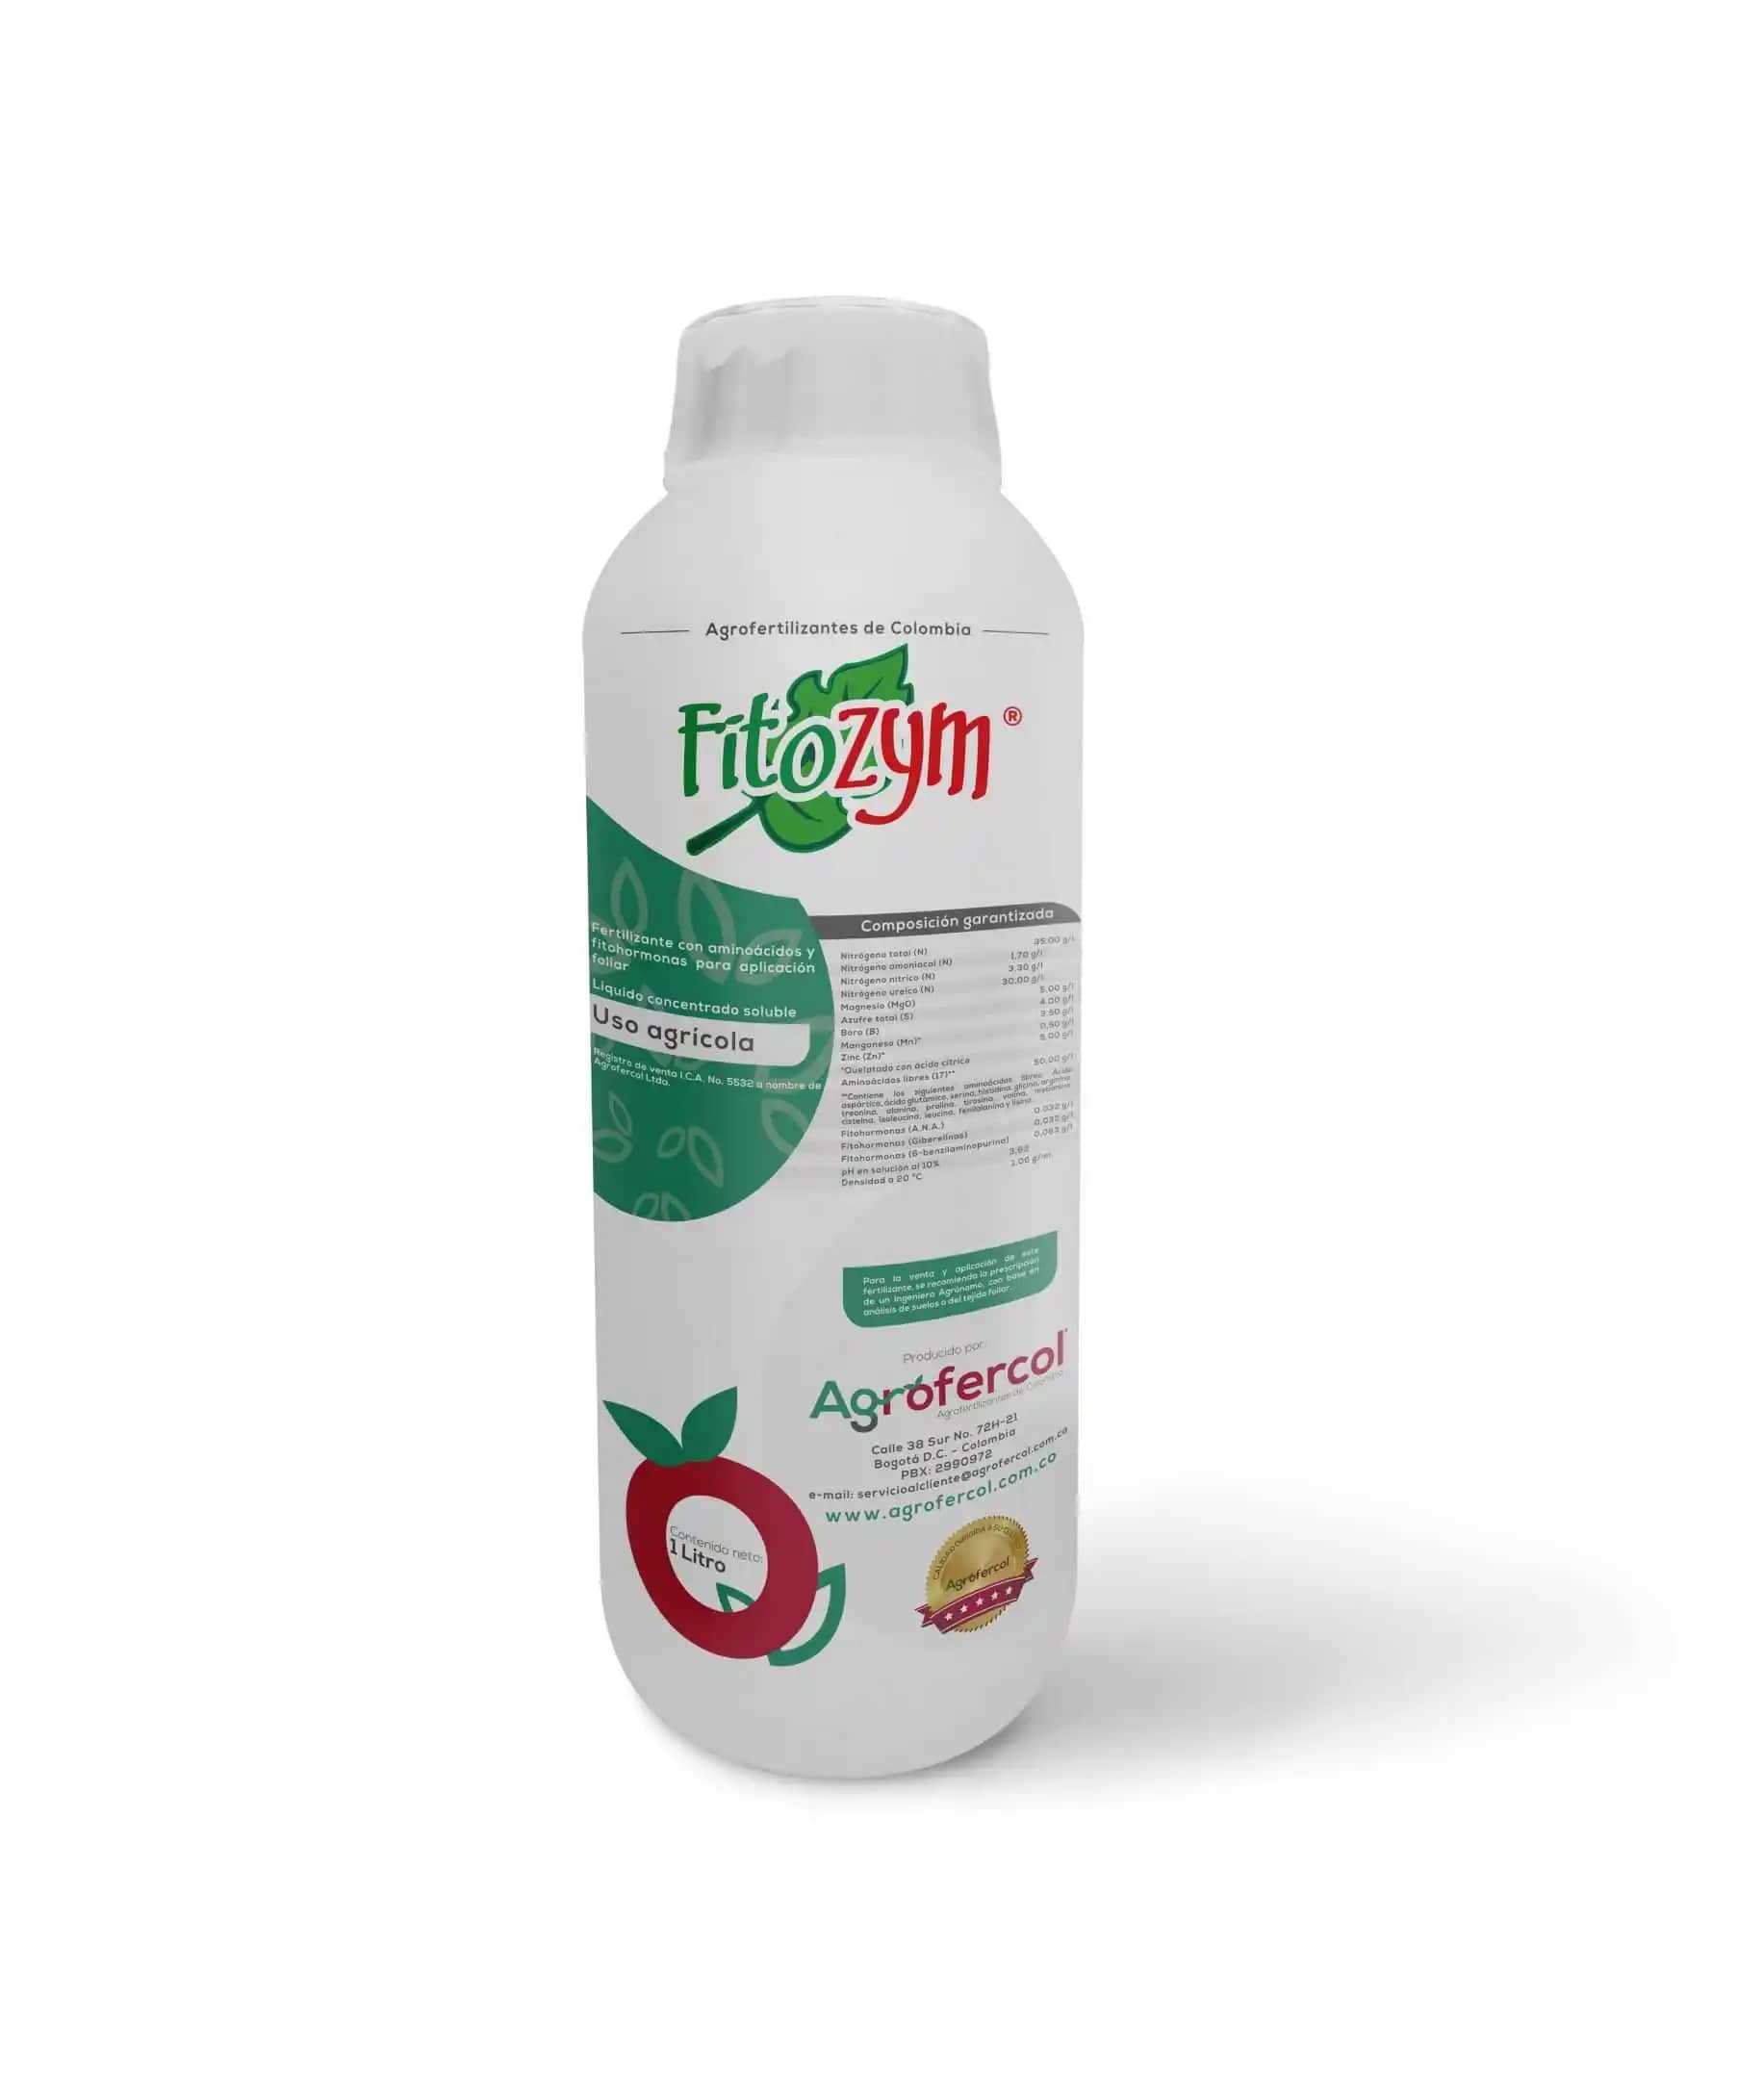 Fitozym Fertilizante Bioestimulante  Agrofercol